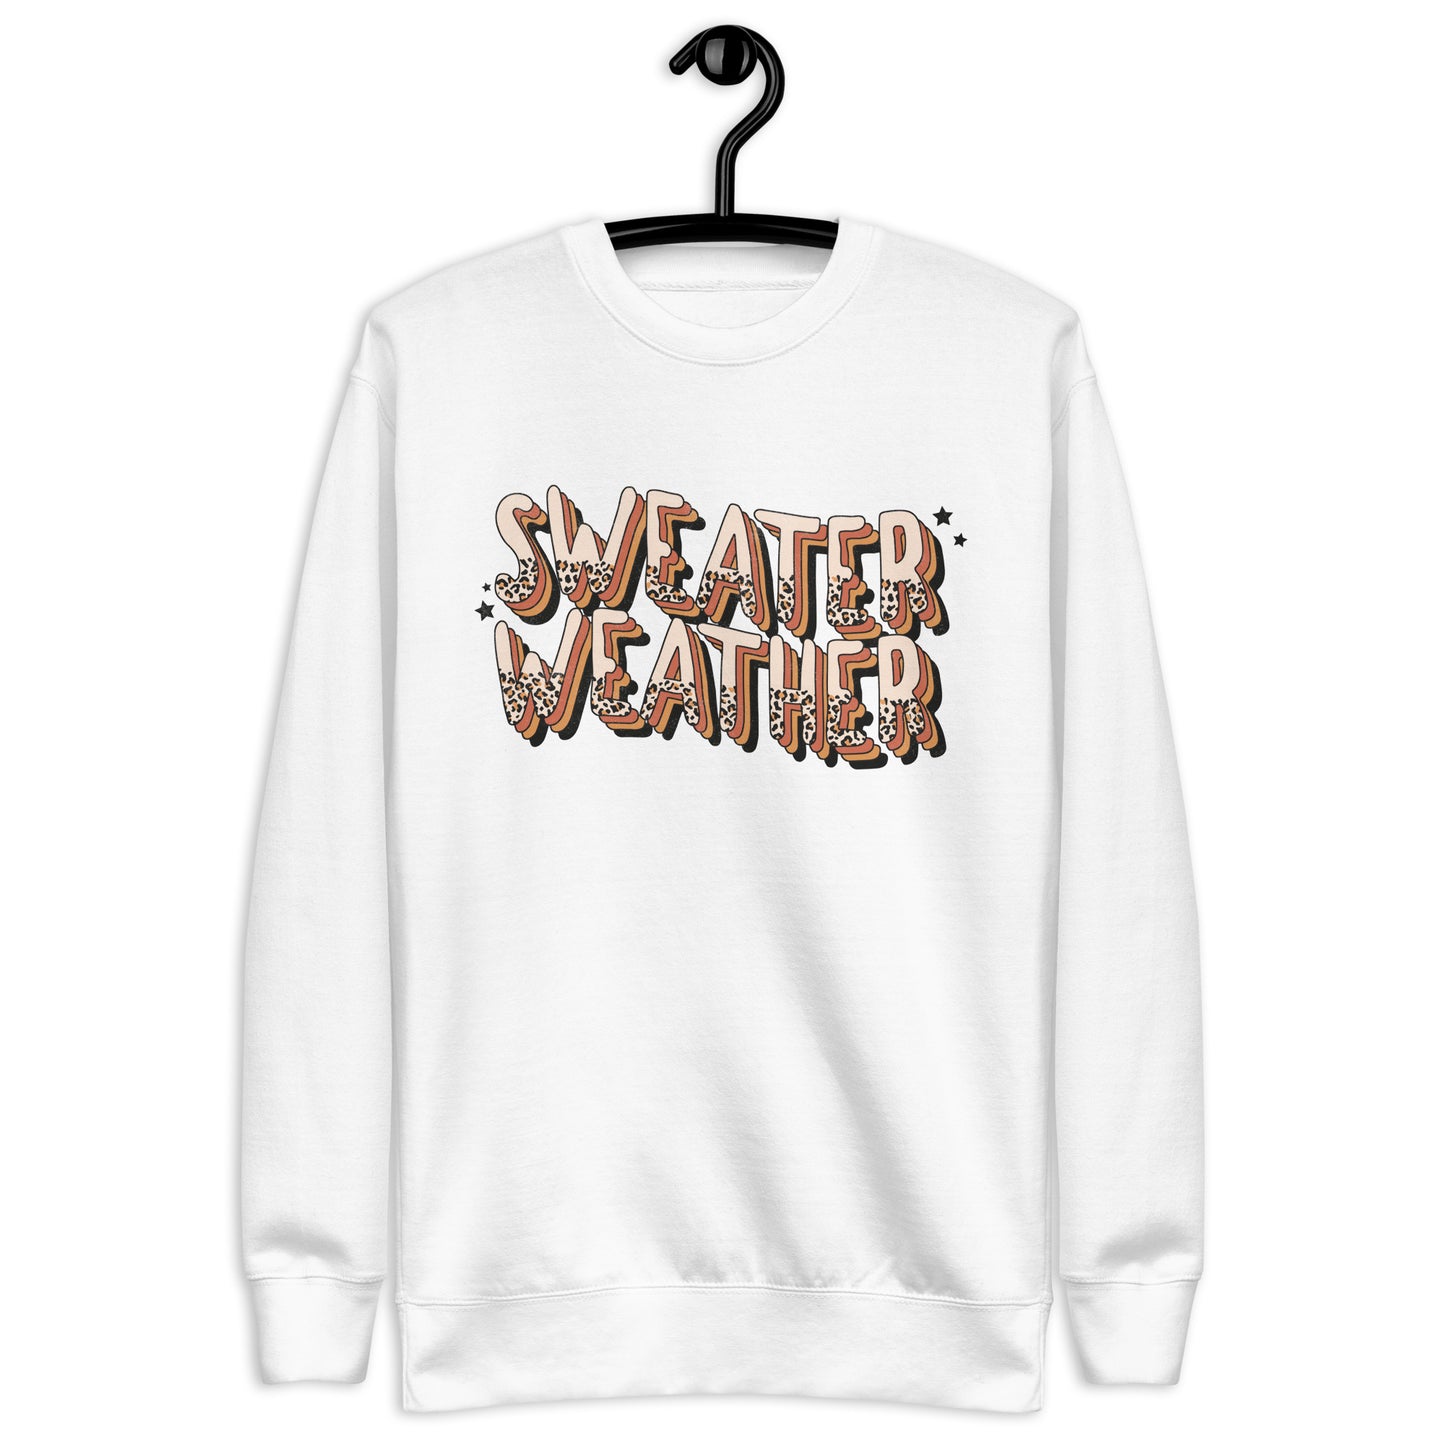 "Sweater Weather' Sweatshirt